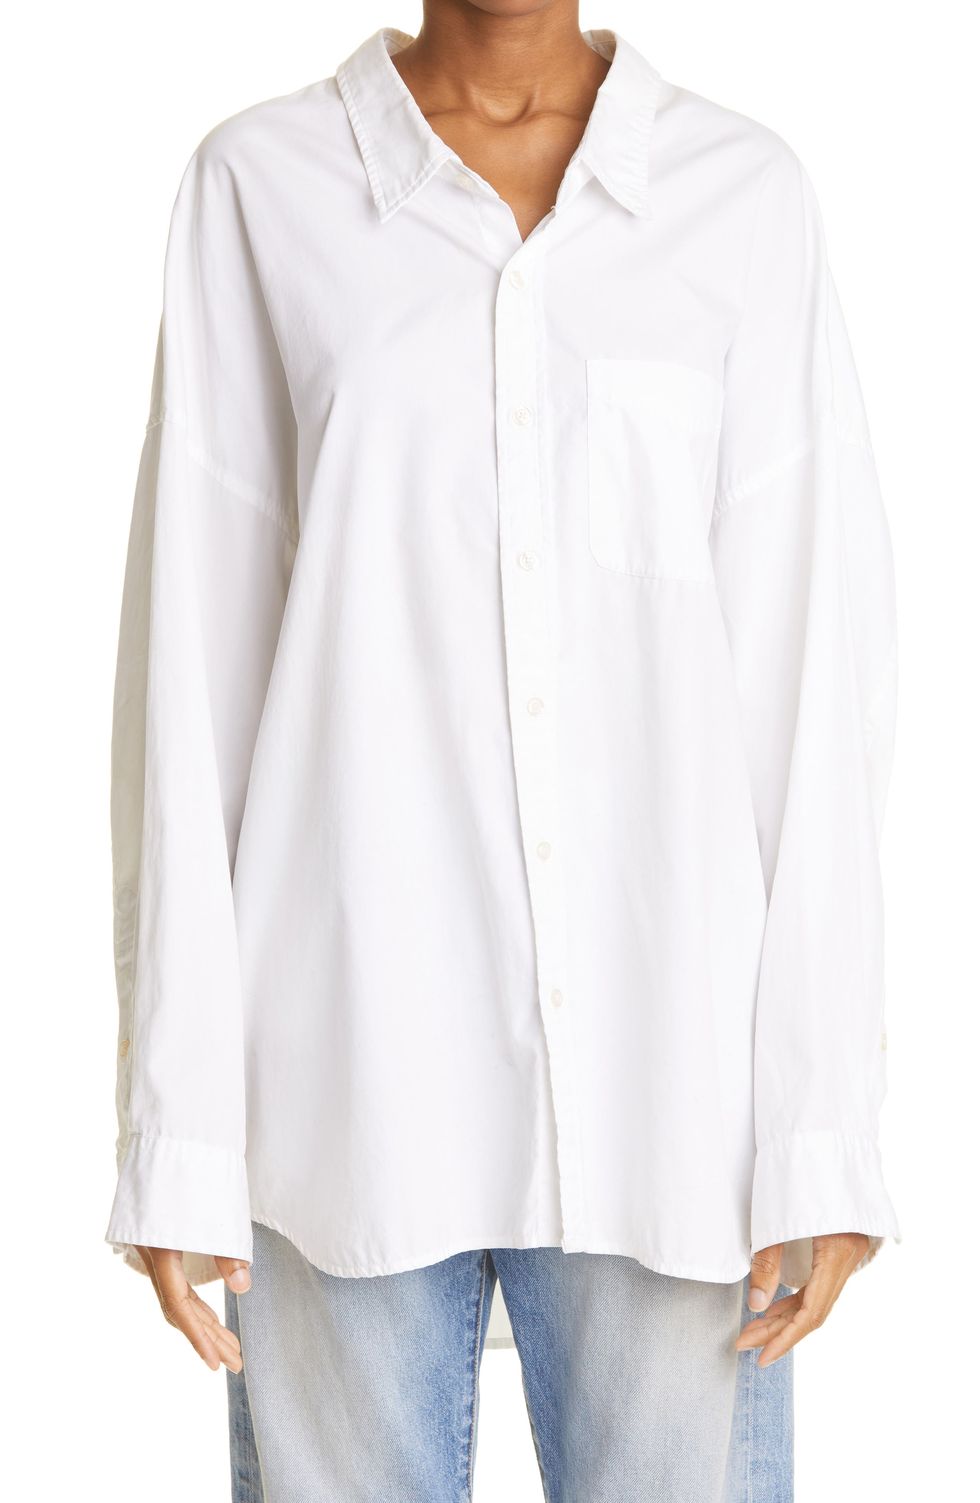 Oversize Oxford Button-Up Shirt